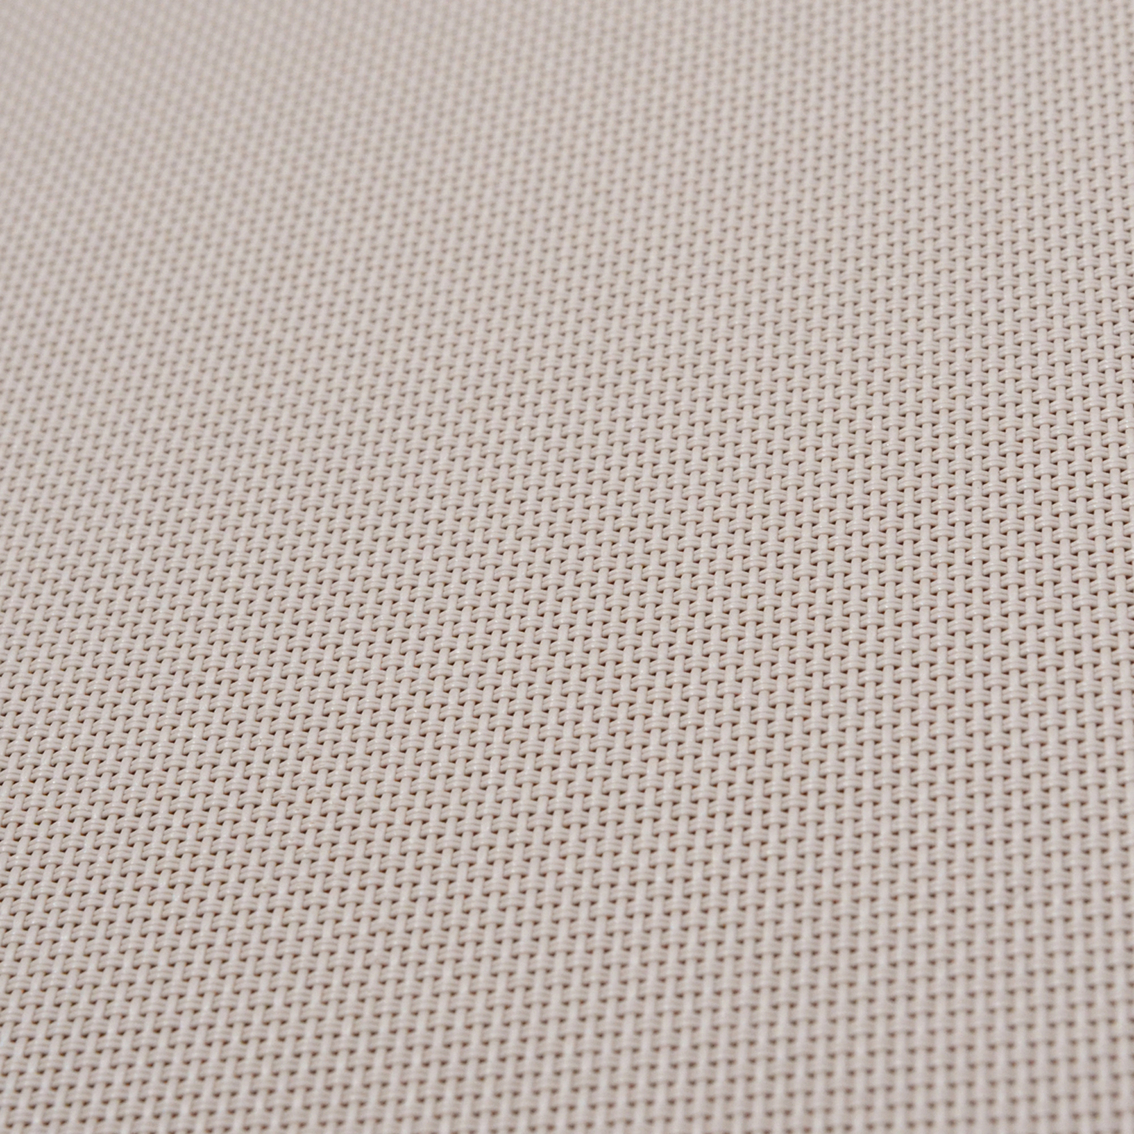 Keystone Fabrics Regal Cordless Outdoor Sun Shade with Protective Valance - Image 4 of 4